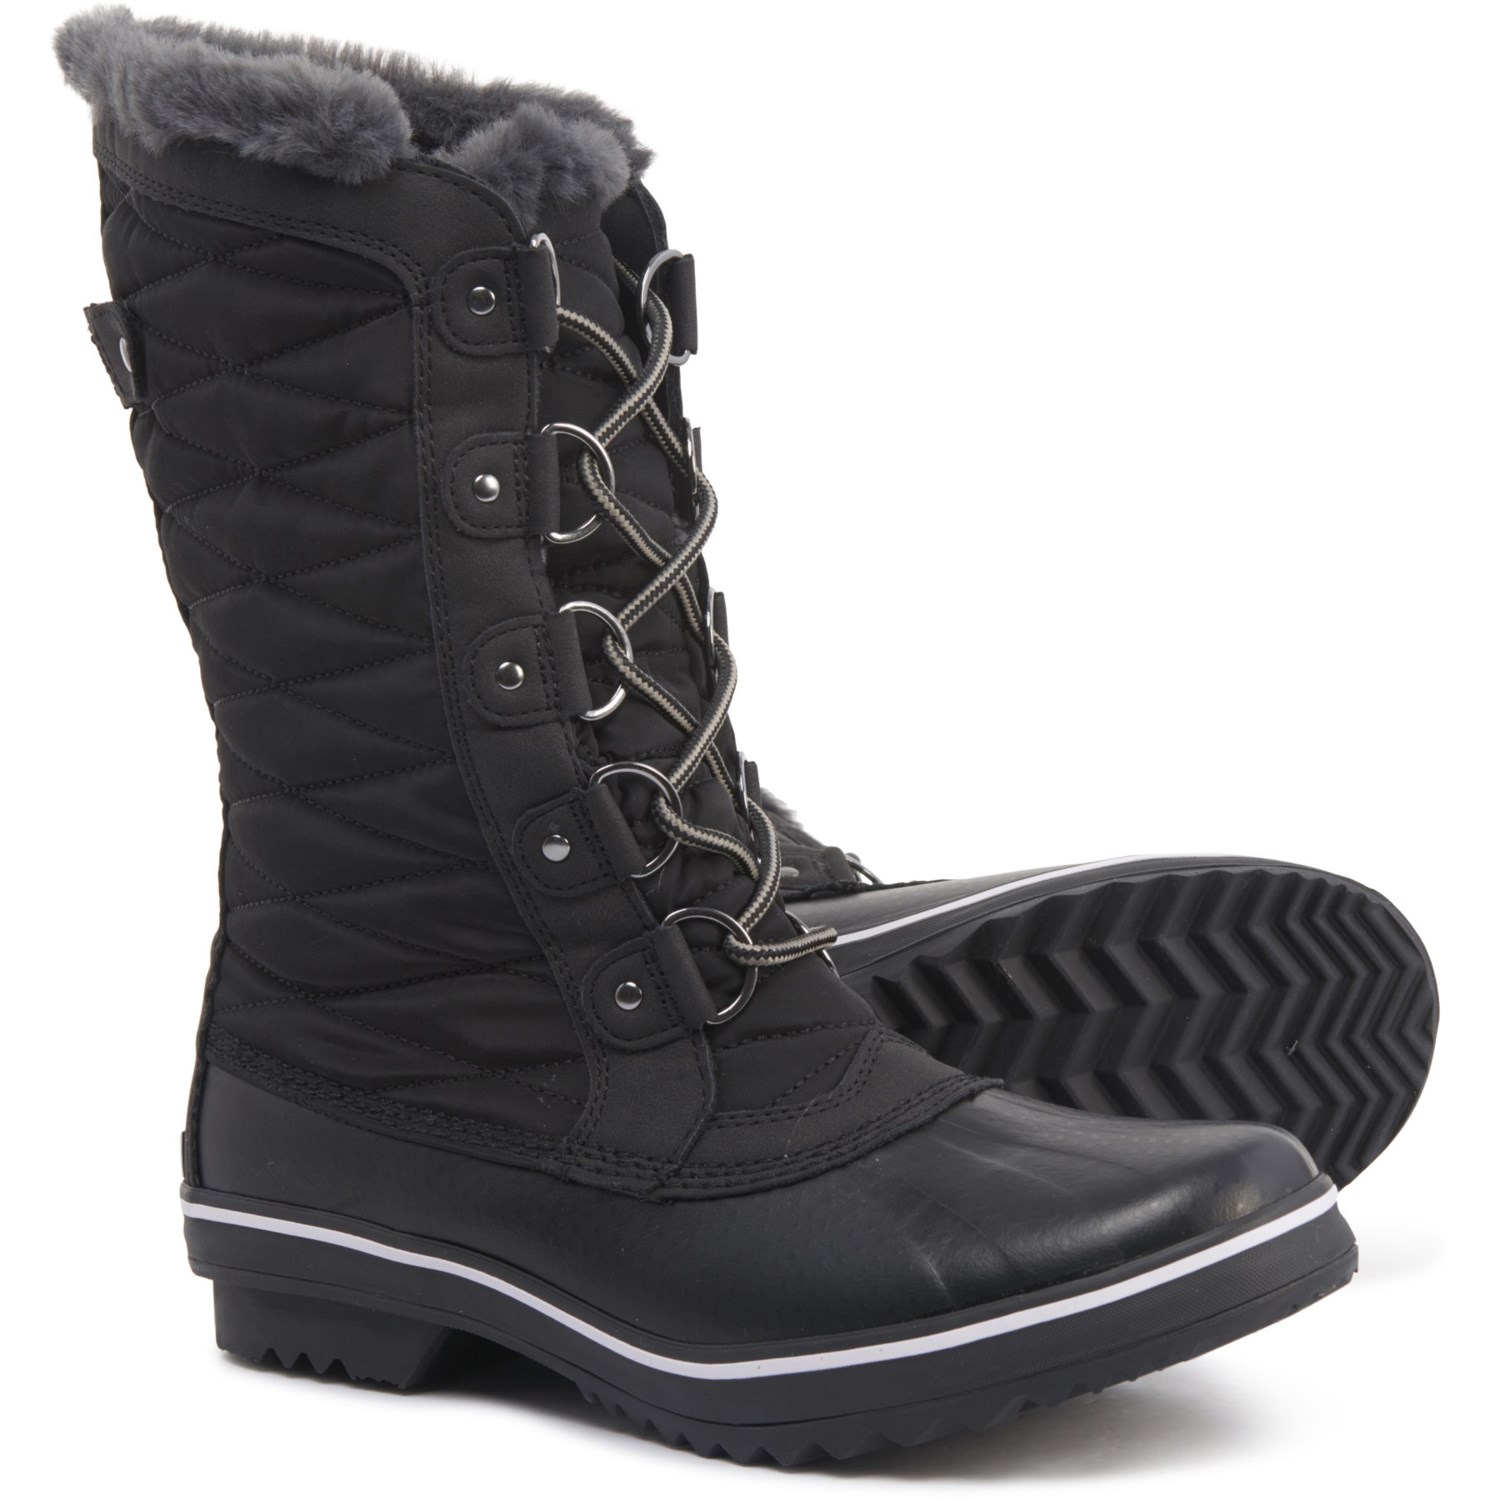 JBU Lorna Snow Boots (For Women) - Save 36%